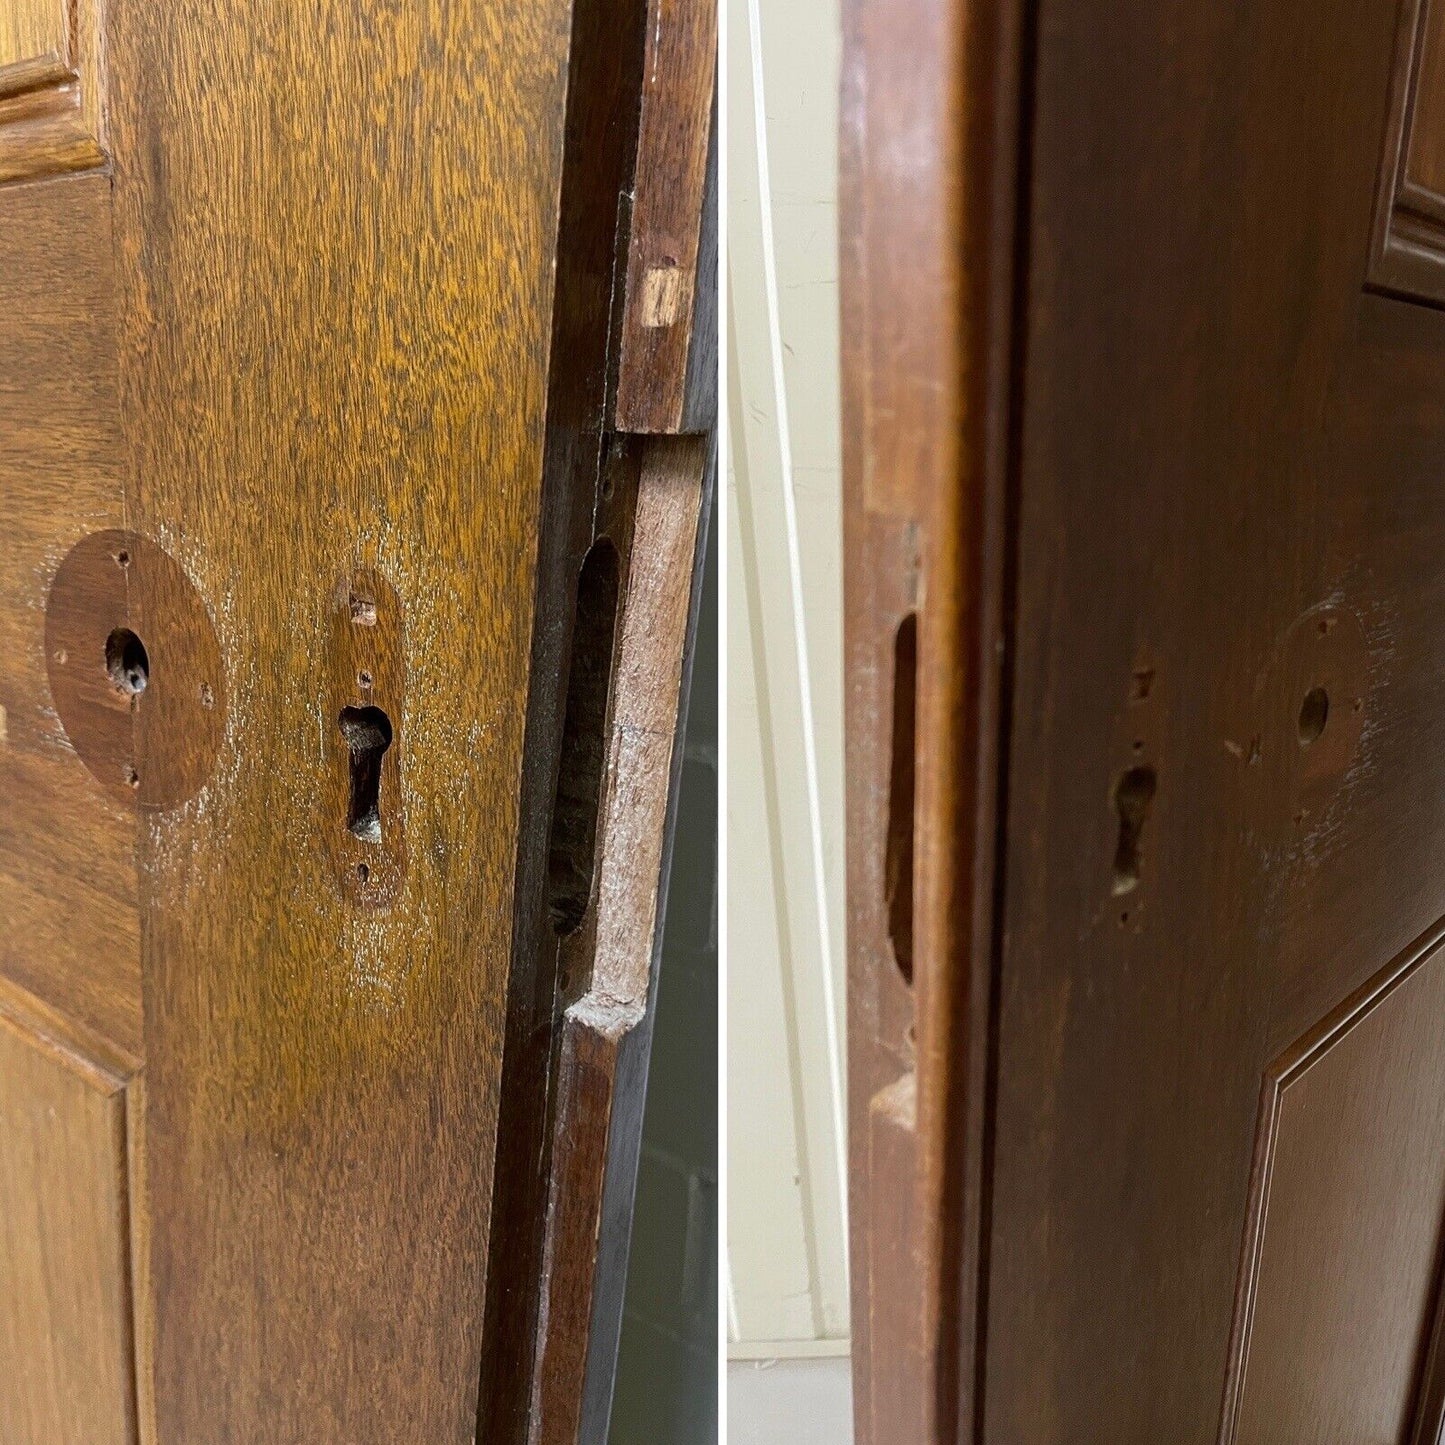 Reclaimed Large French Mahogany  Wooden Double Doors Provenance Knightsbridge